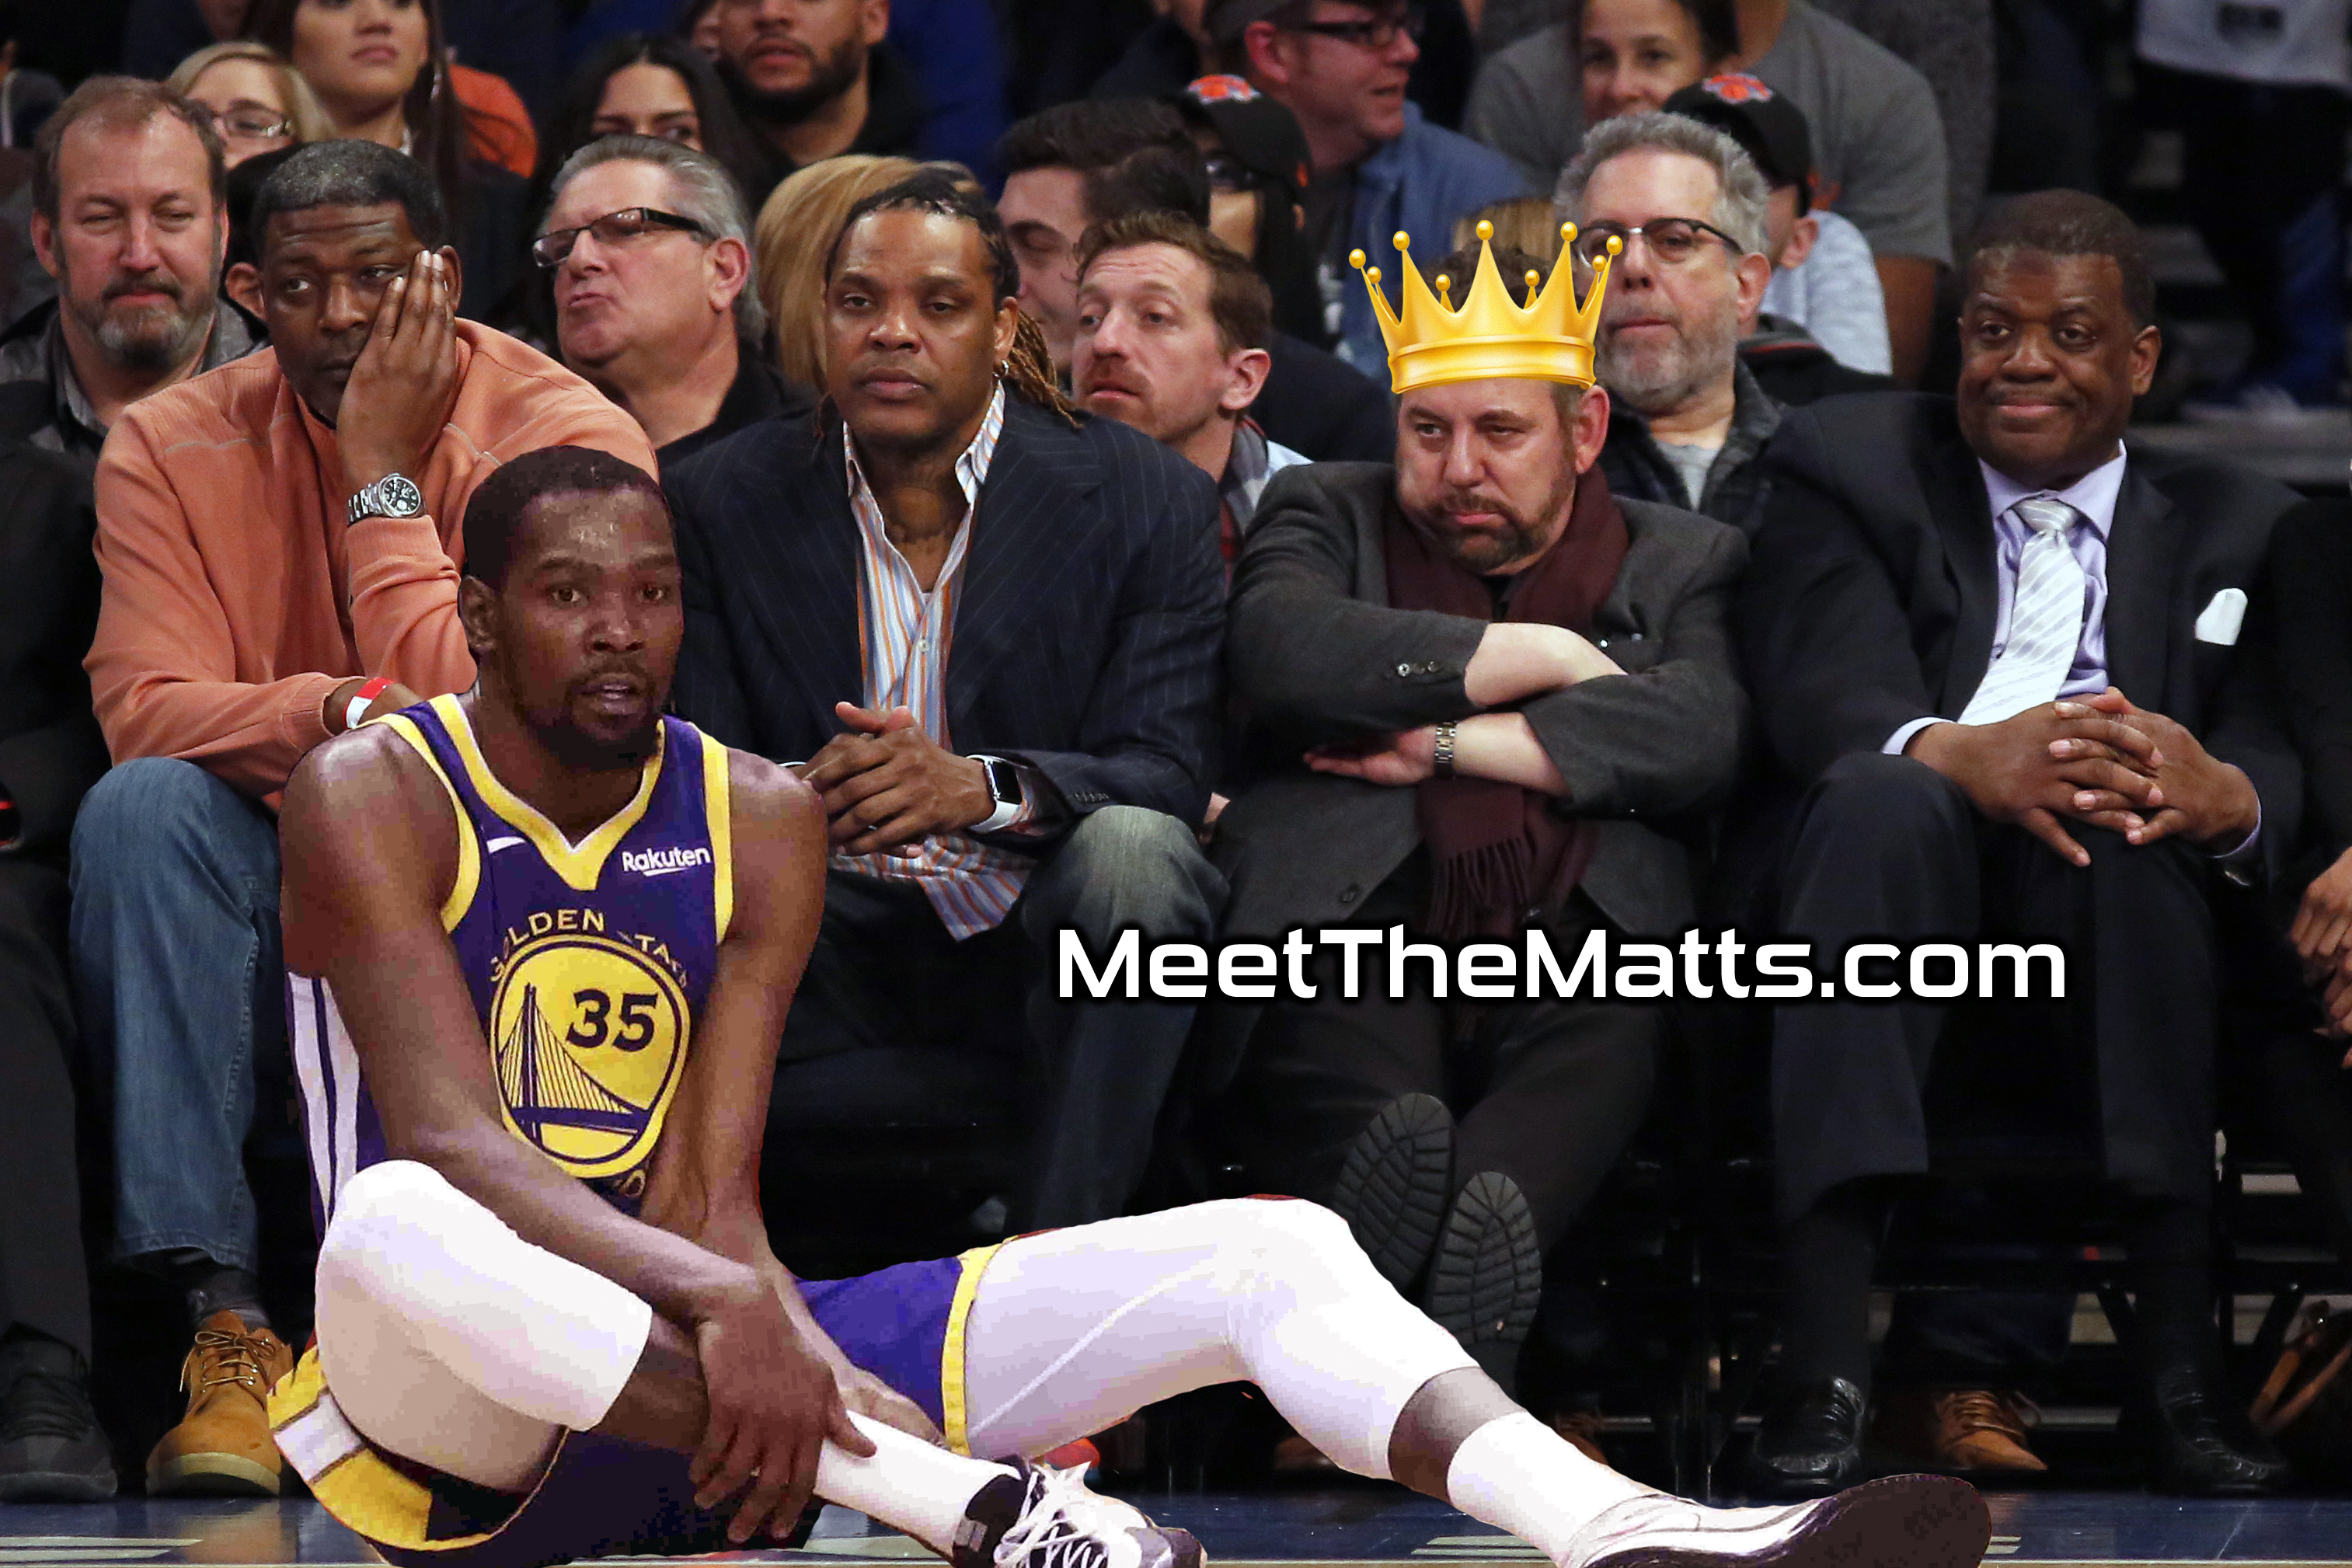 Kevin_Durant-Knicks-Buddy_Diaz-Meet_The_Matts-nba-finals-Jim_Dolan-Larry_Johnson-Latrell-Spreewell.jpg